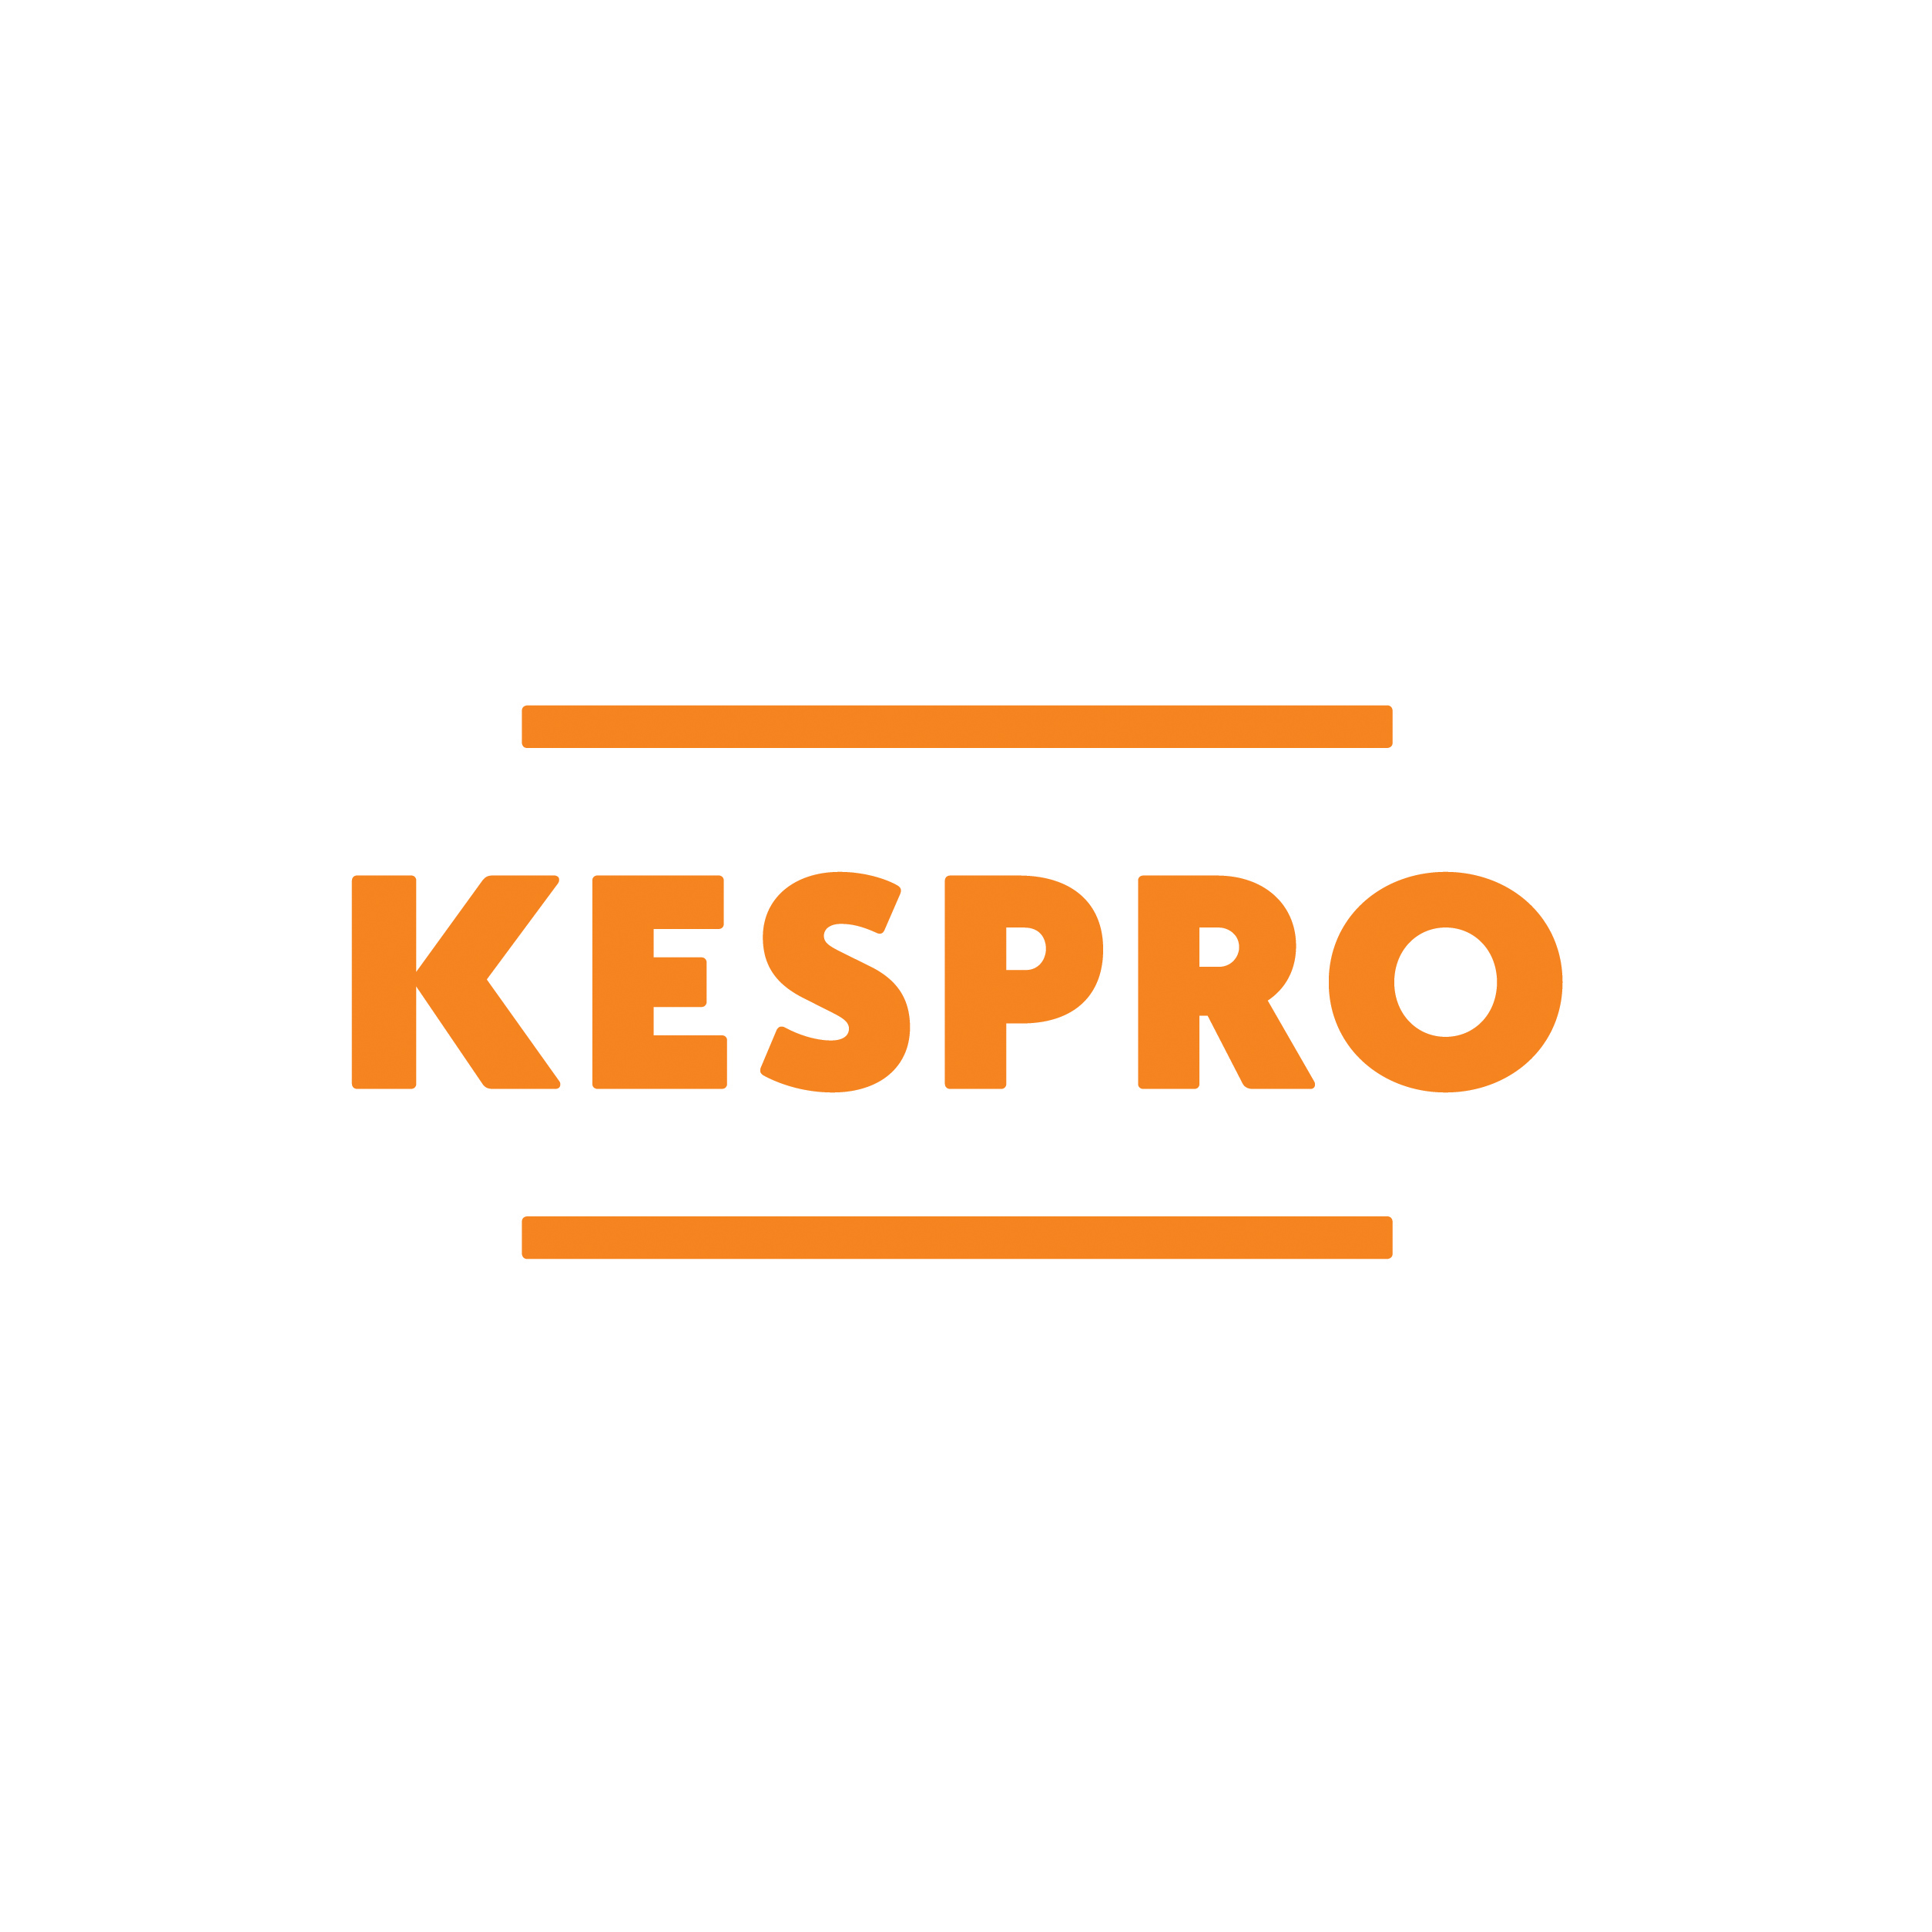 Kespro_logo_nelio.jpg